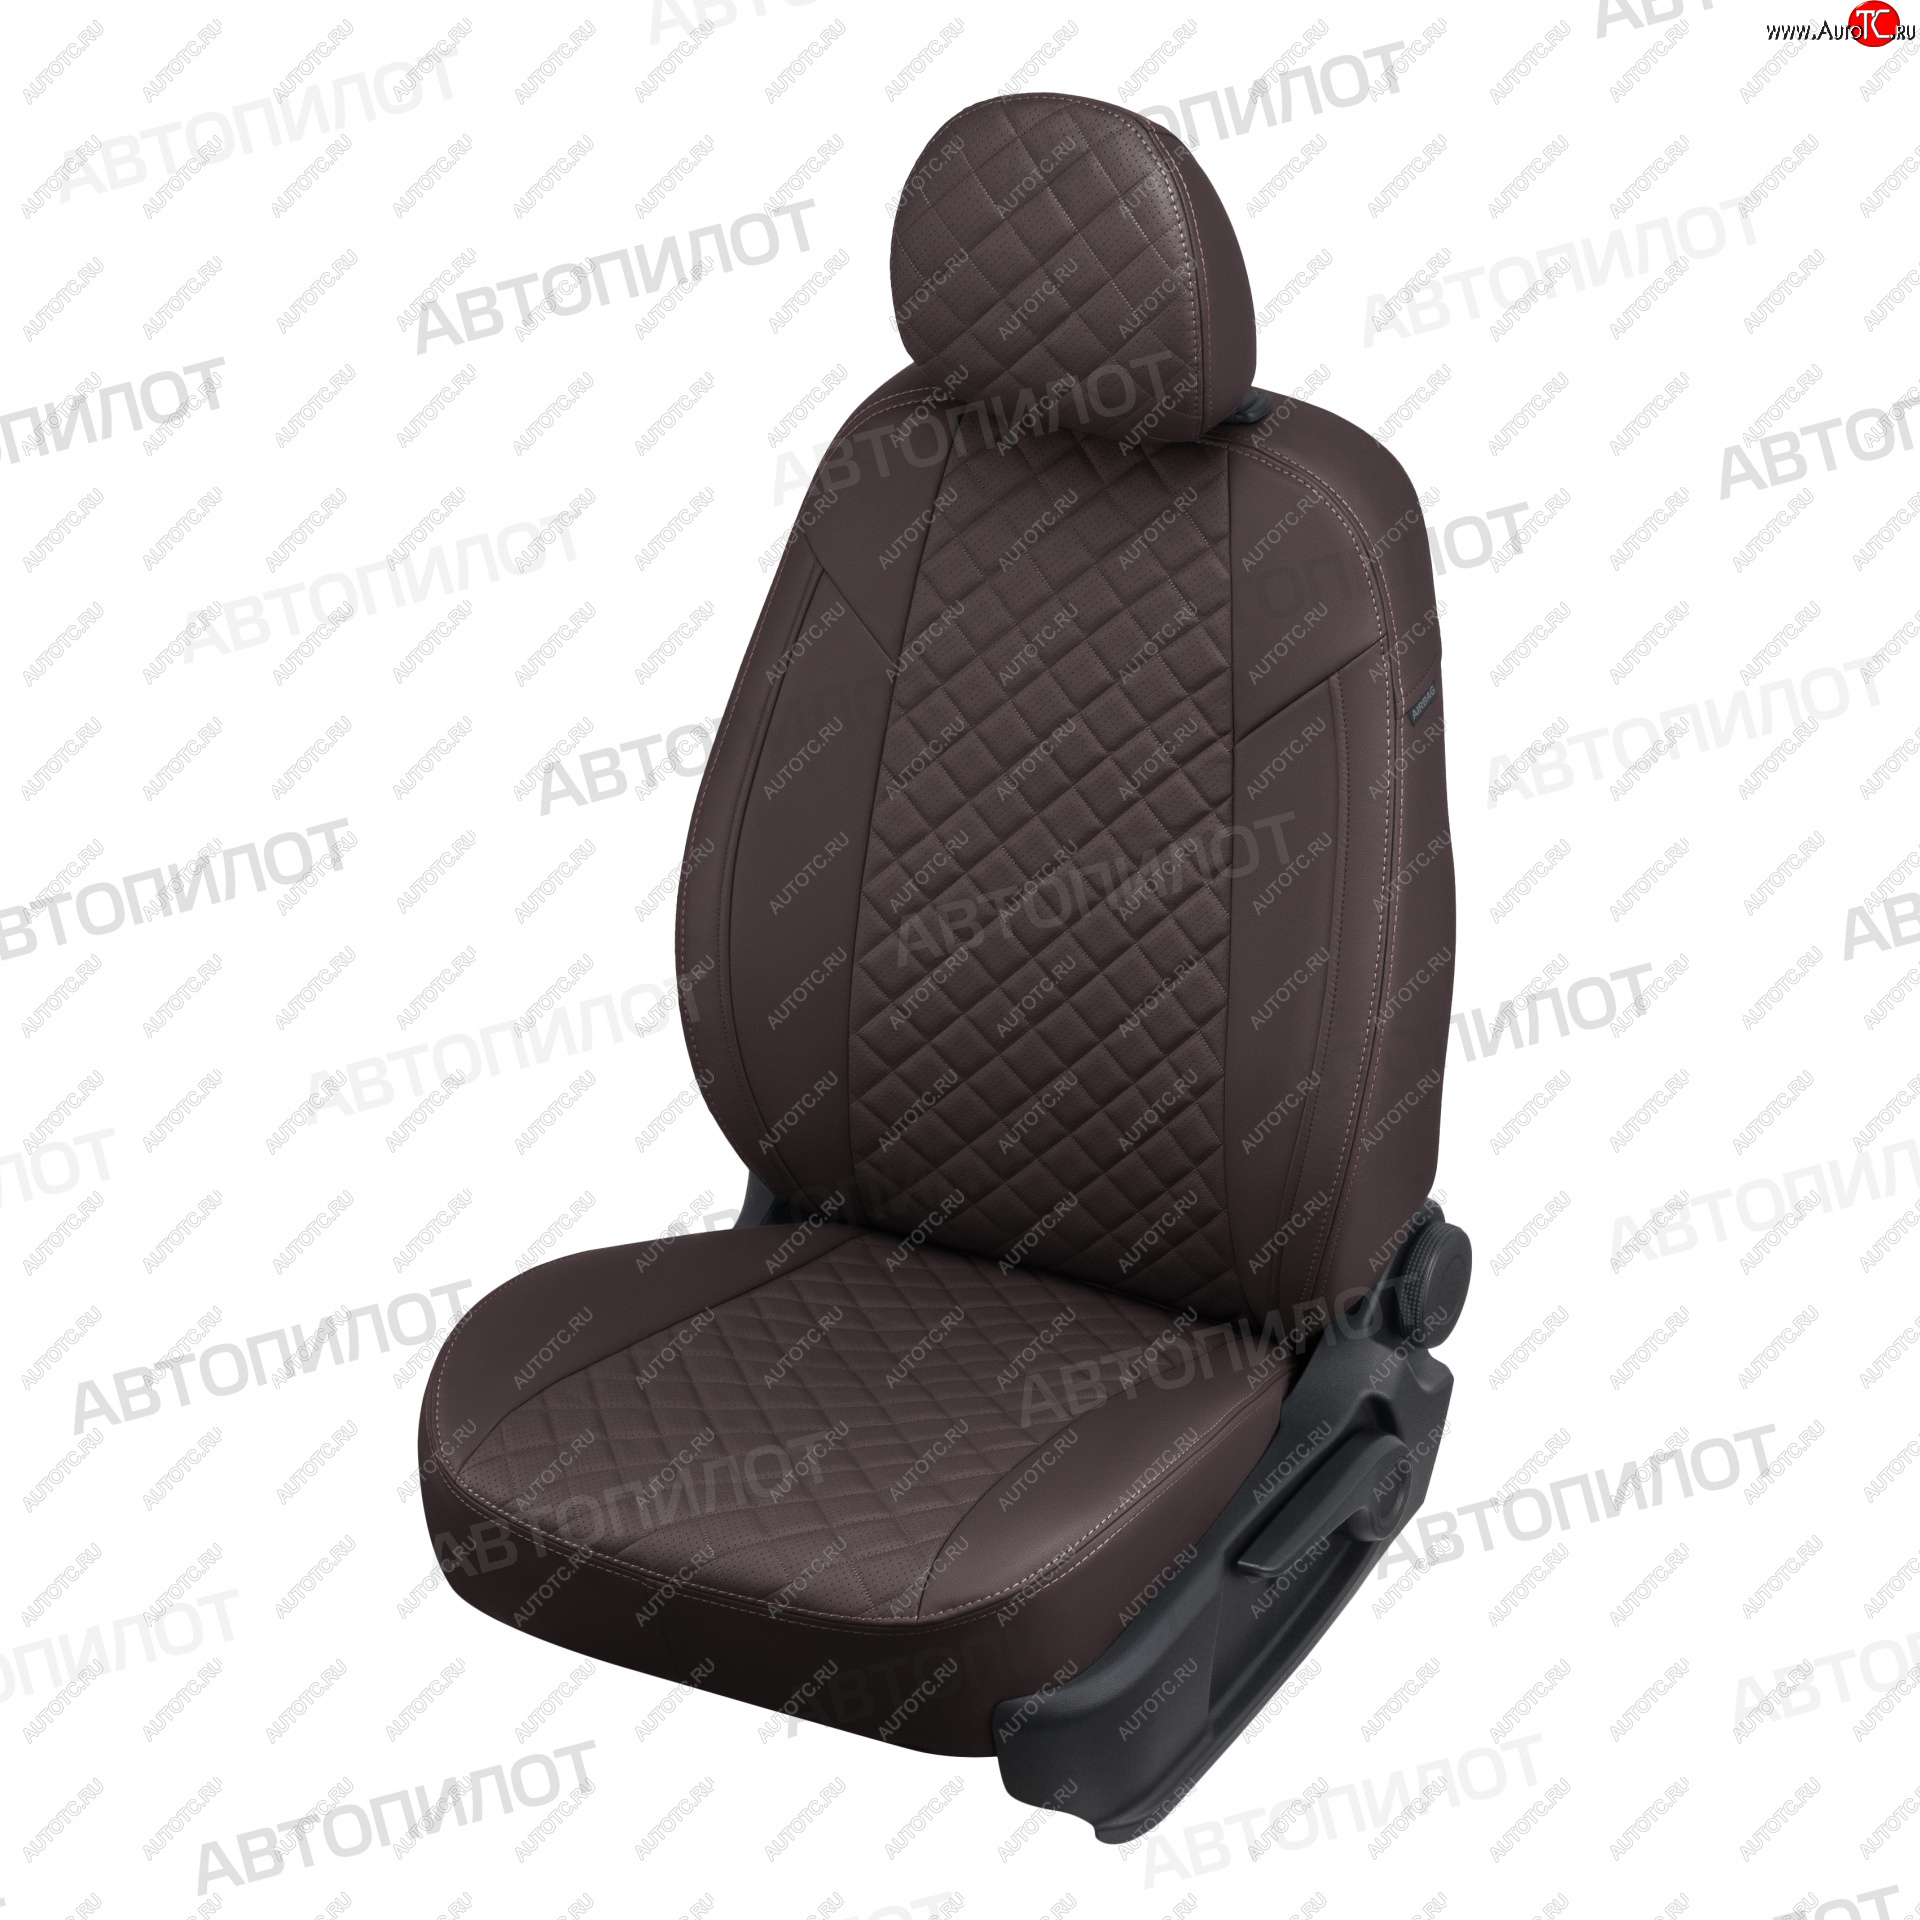 7 799 р. Чехлы сидений (5 мест, экокожа) Автопилот Ромб  Ford Galaxy  2 (2006-2015) (шоколад)